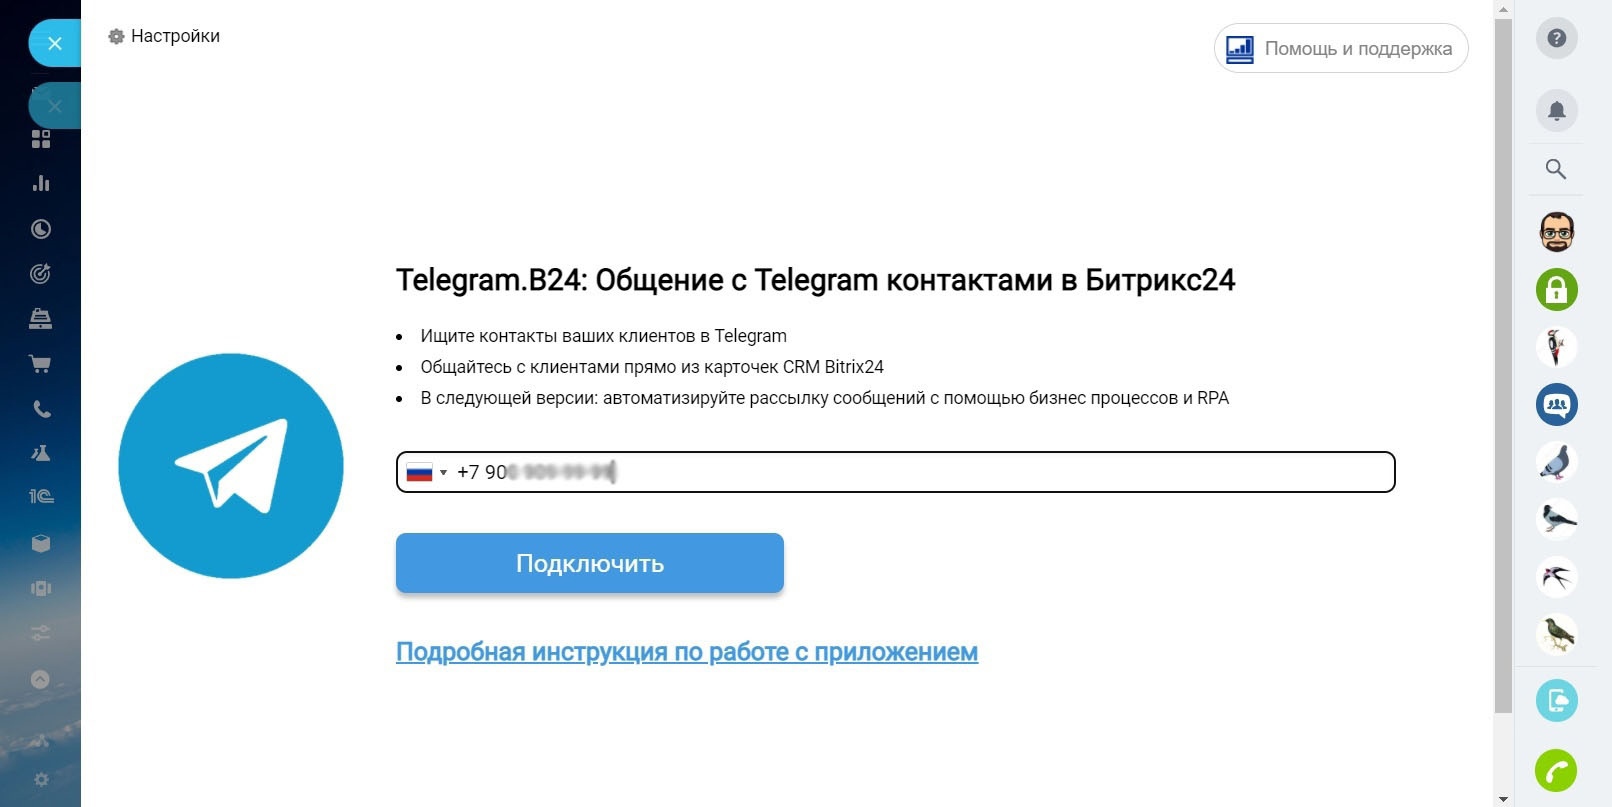 Установить приложение телеграмм на телефон бесплатно без регистрации фото 118